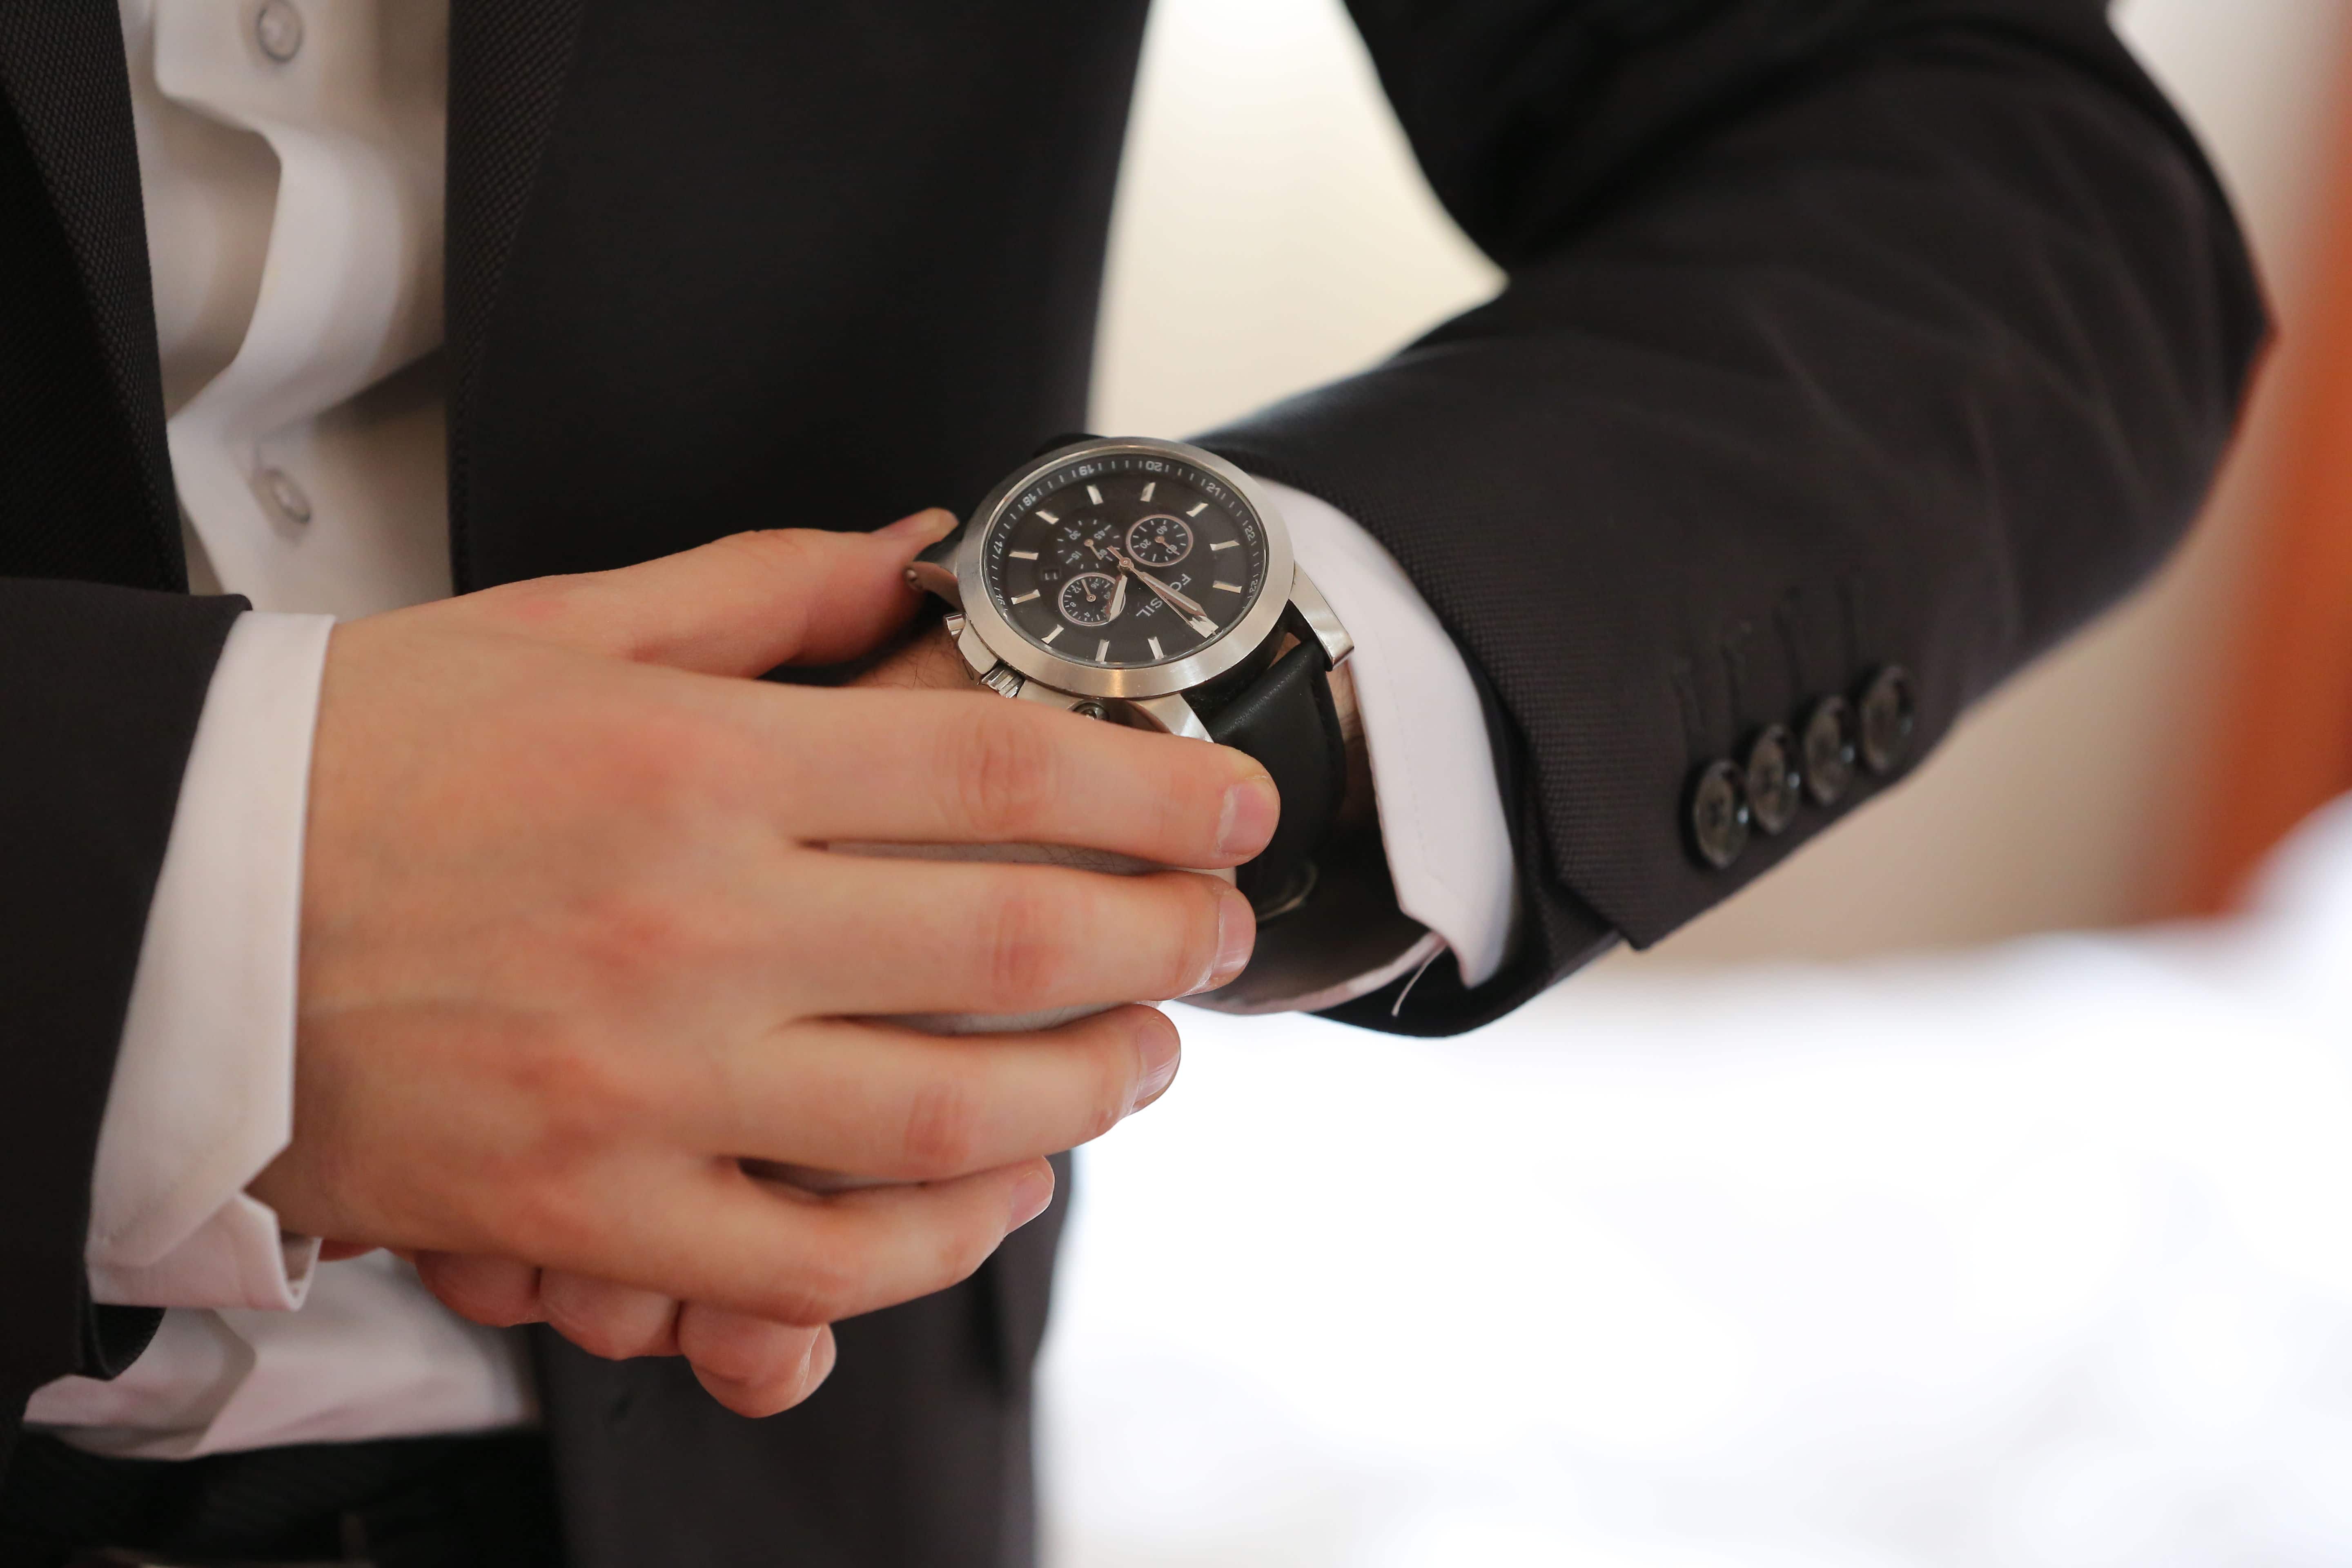 Картинки руки часы. Наручные часы на руке. Часы ручные на руке. Мужчина с часами на руке. Мужская рука с часами.